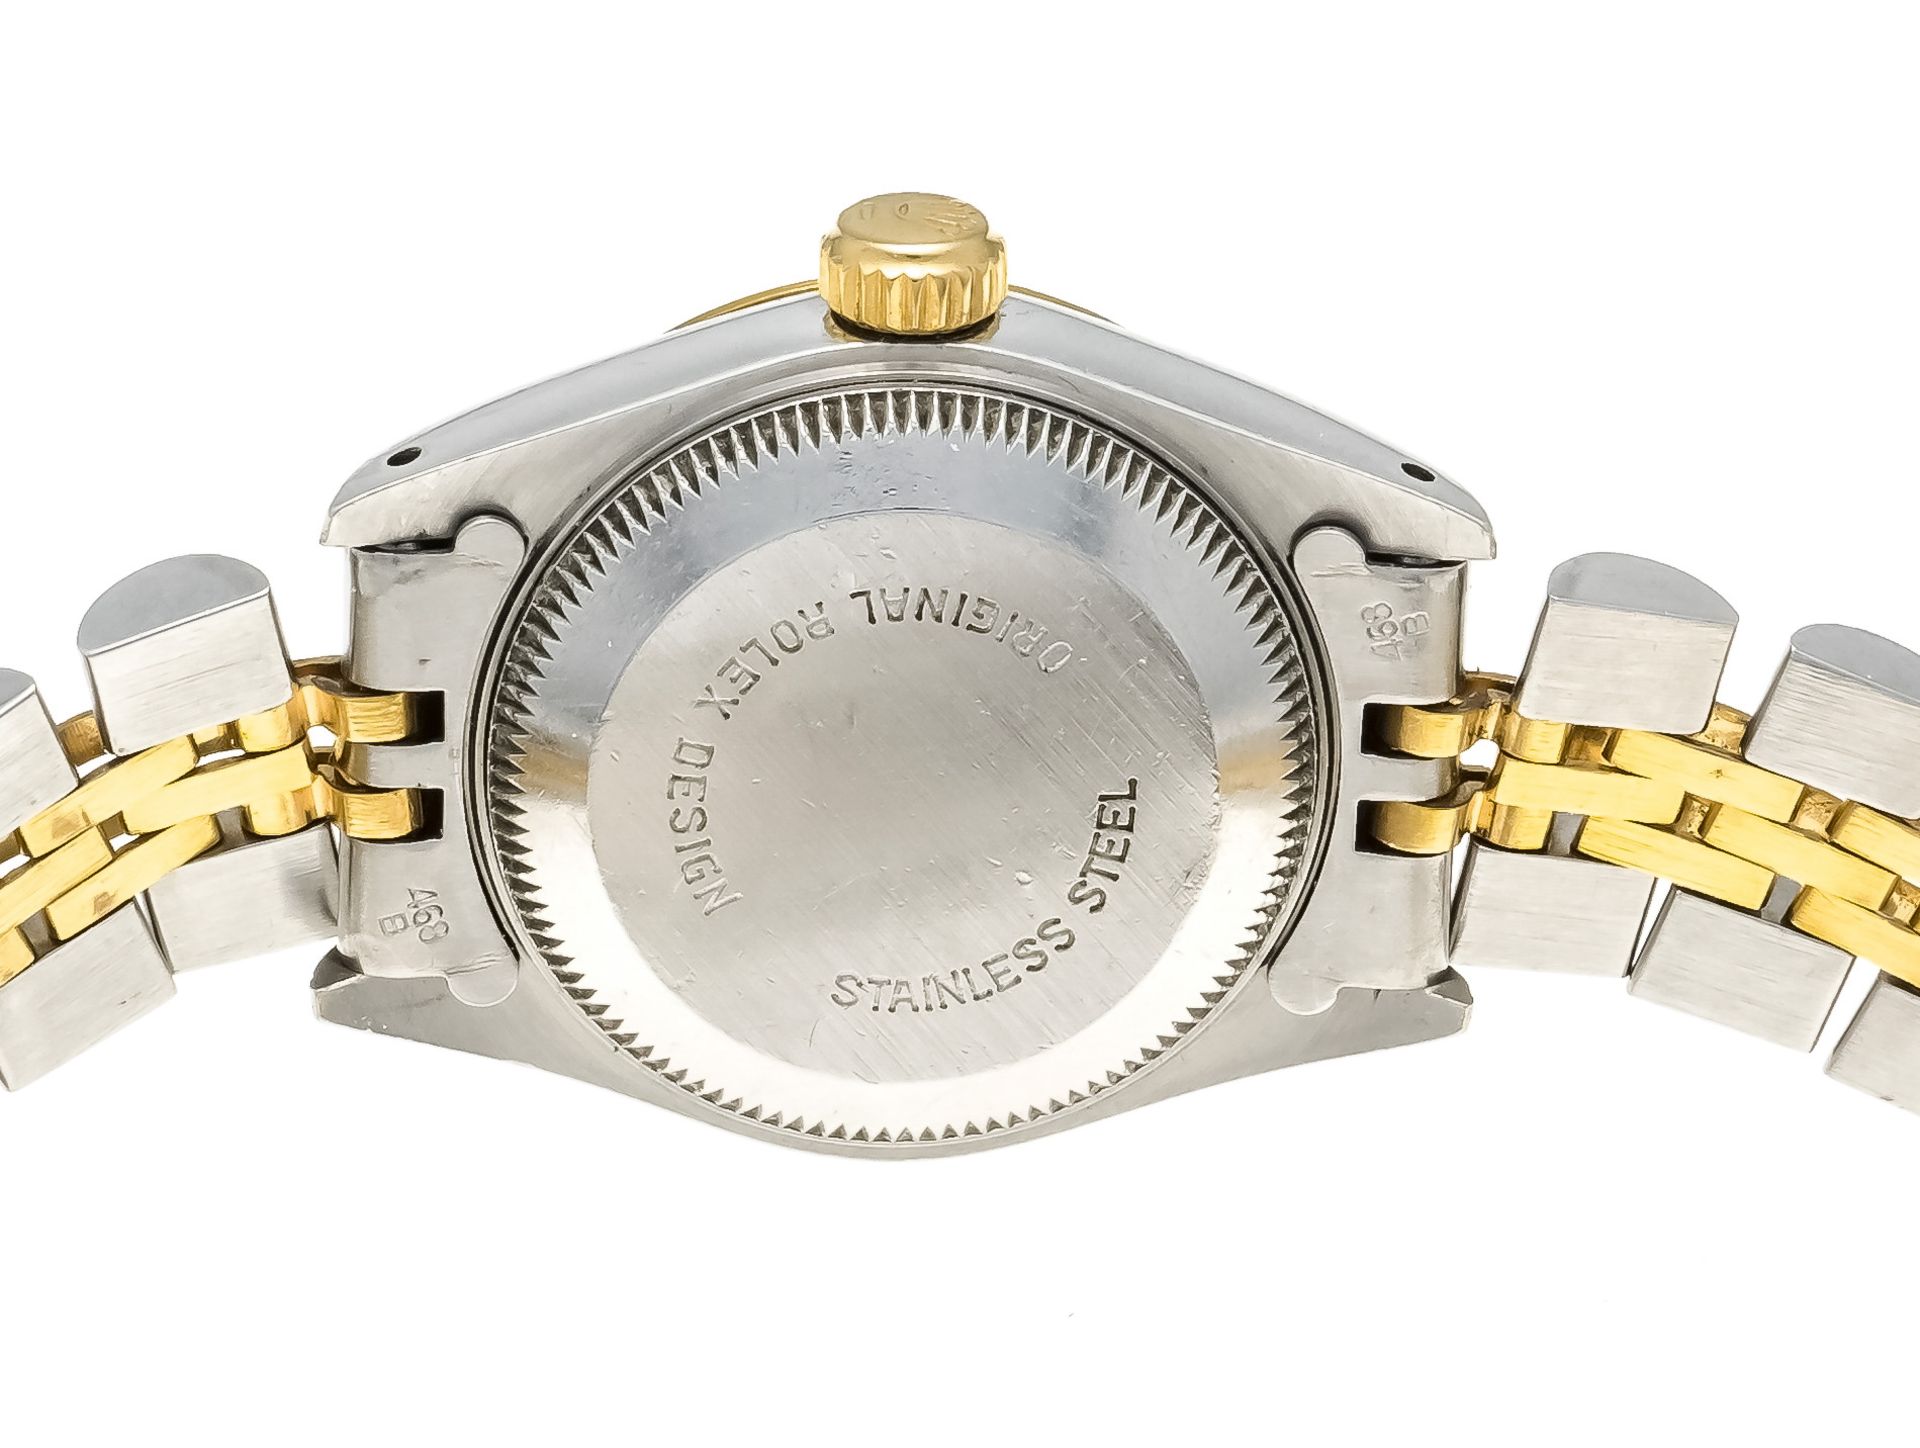 Rolex Lady Datejust ladies' wristwatch Automatic, steel/gold 750/000 GG, Ref. 69173, circa 1983, - Image 2 of 3